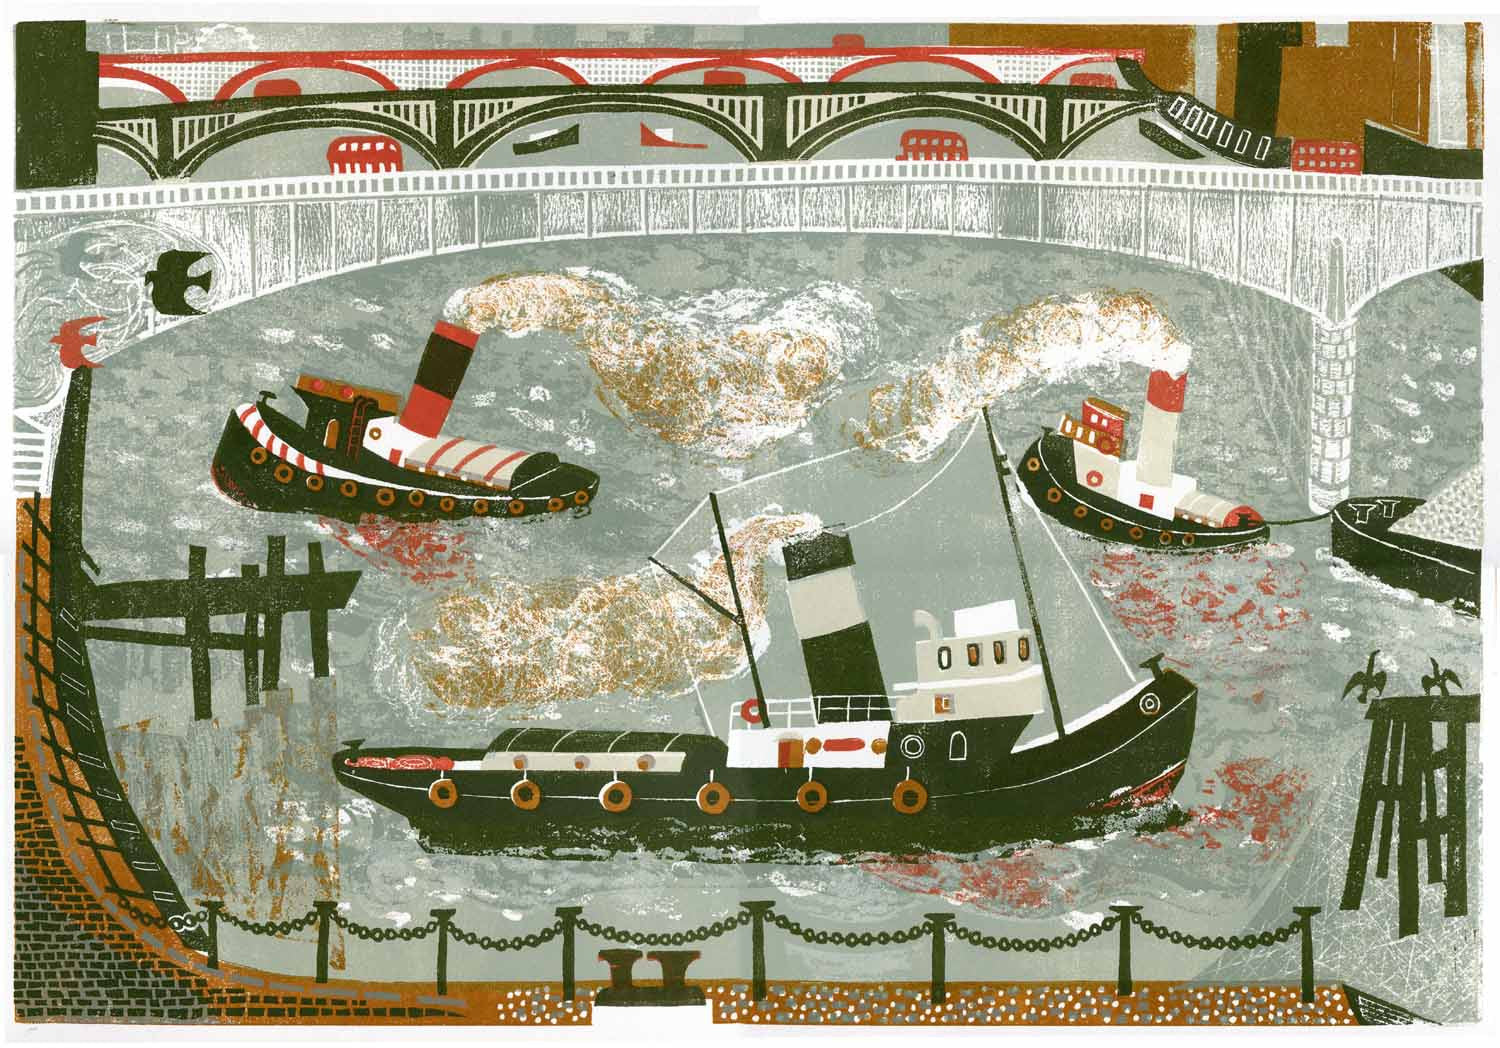 Tugboat on the Thames - Melvyn Evans - St. Jude's Prints